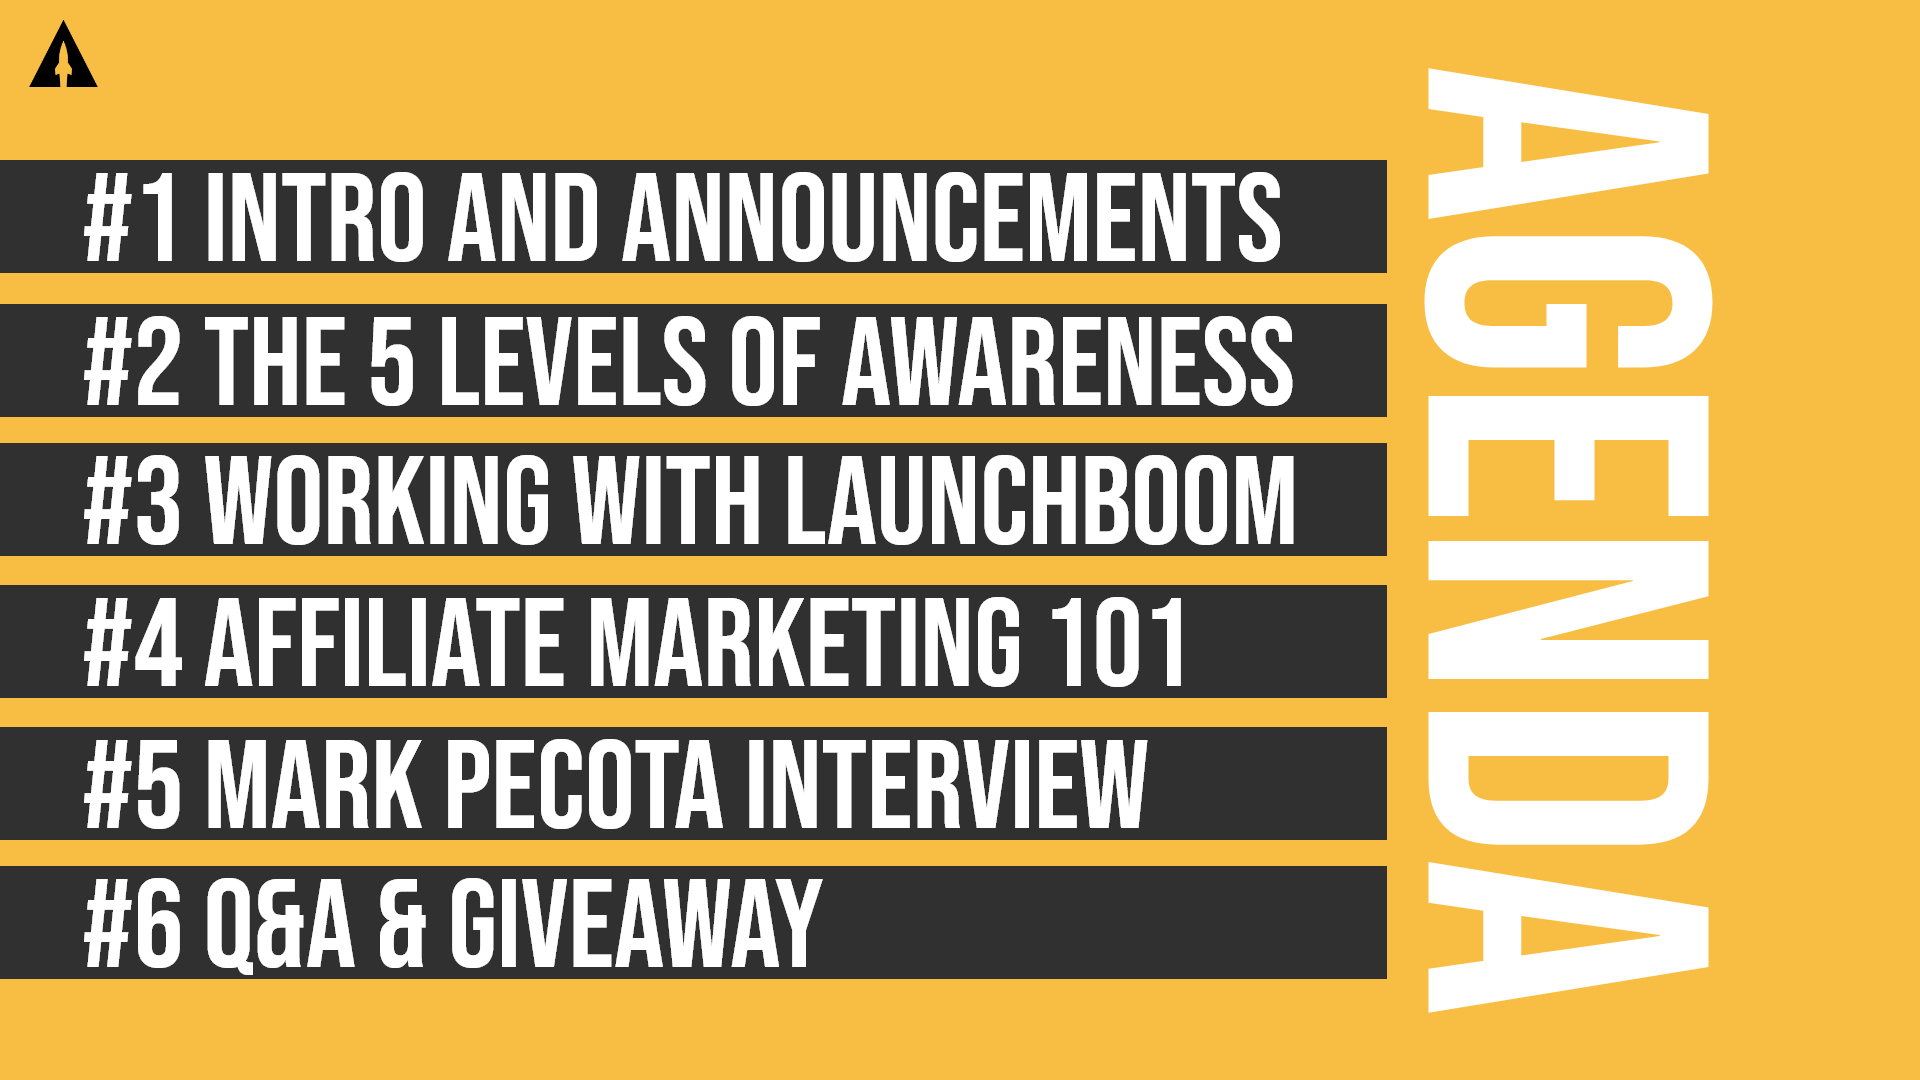 LaunchBoom Live Recap: Customer awareness, affiliate marketing, and an interview